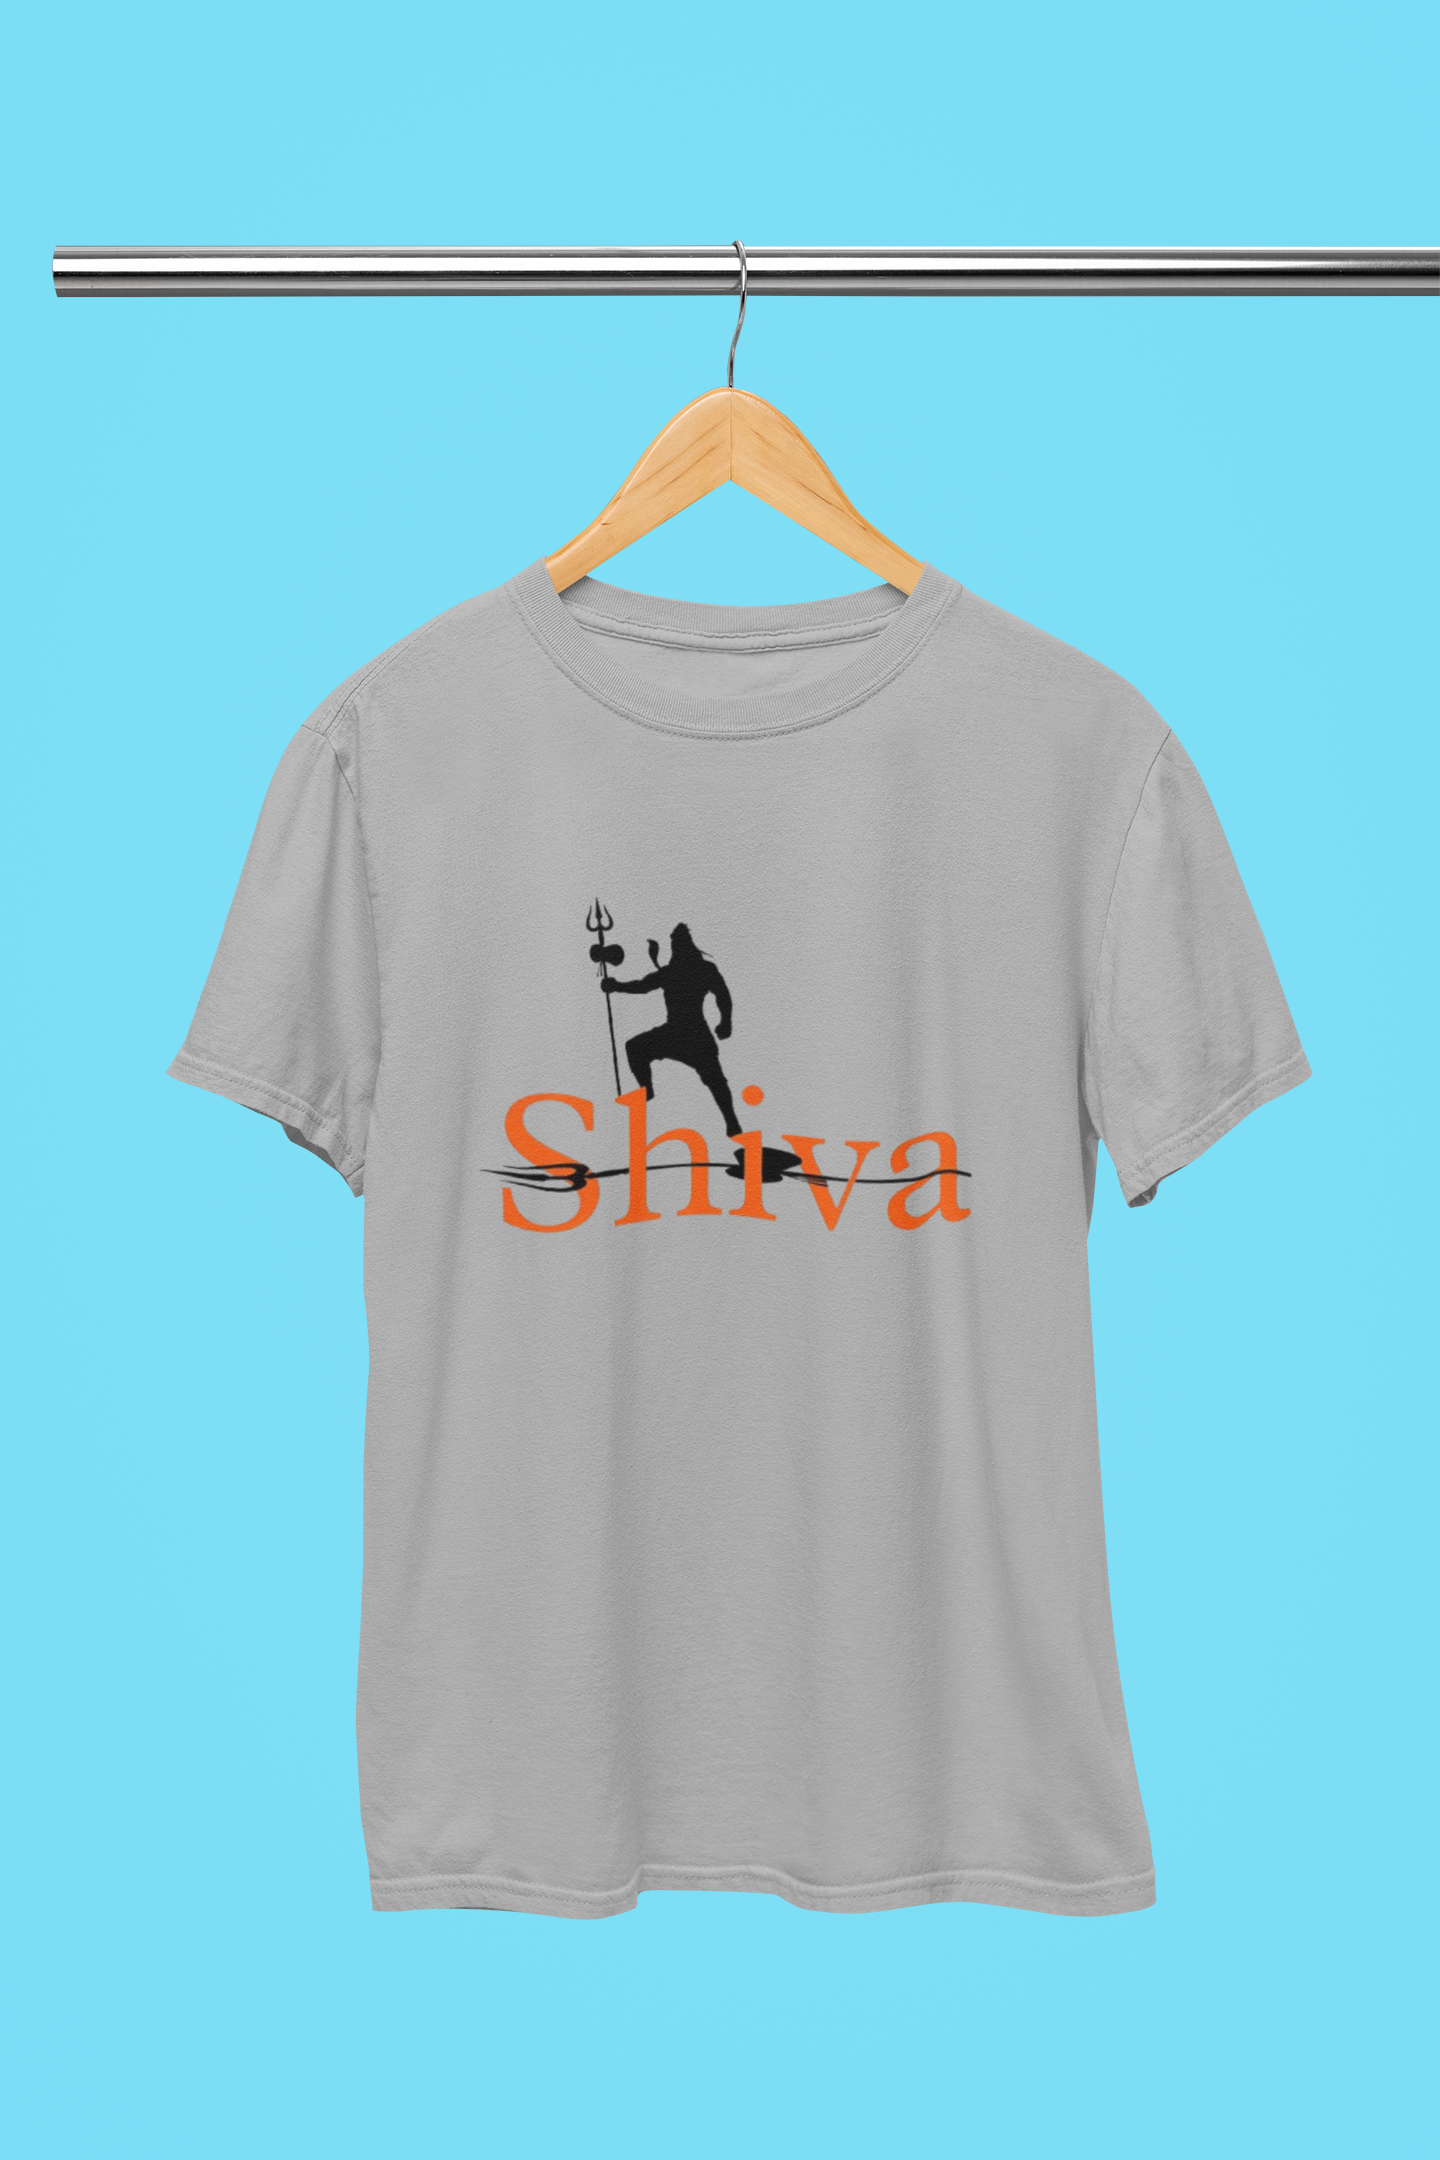 Lord Shiva Name T-Shirt